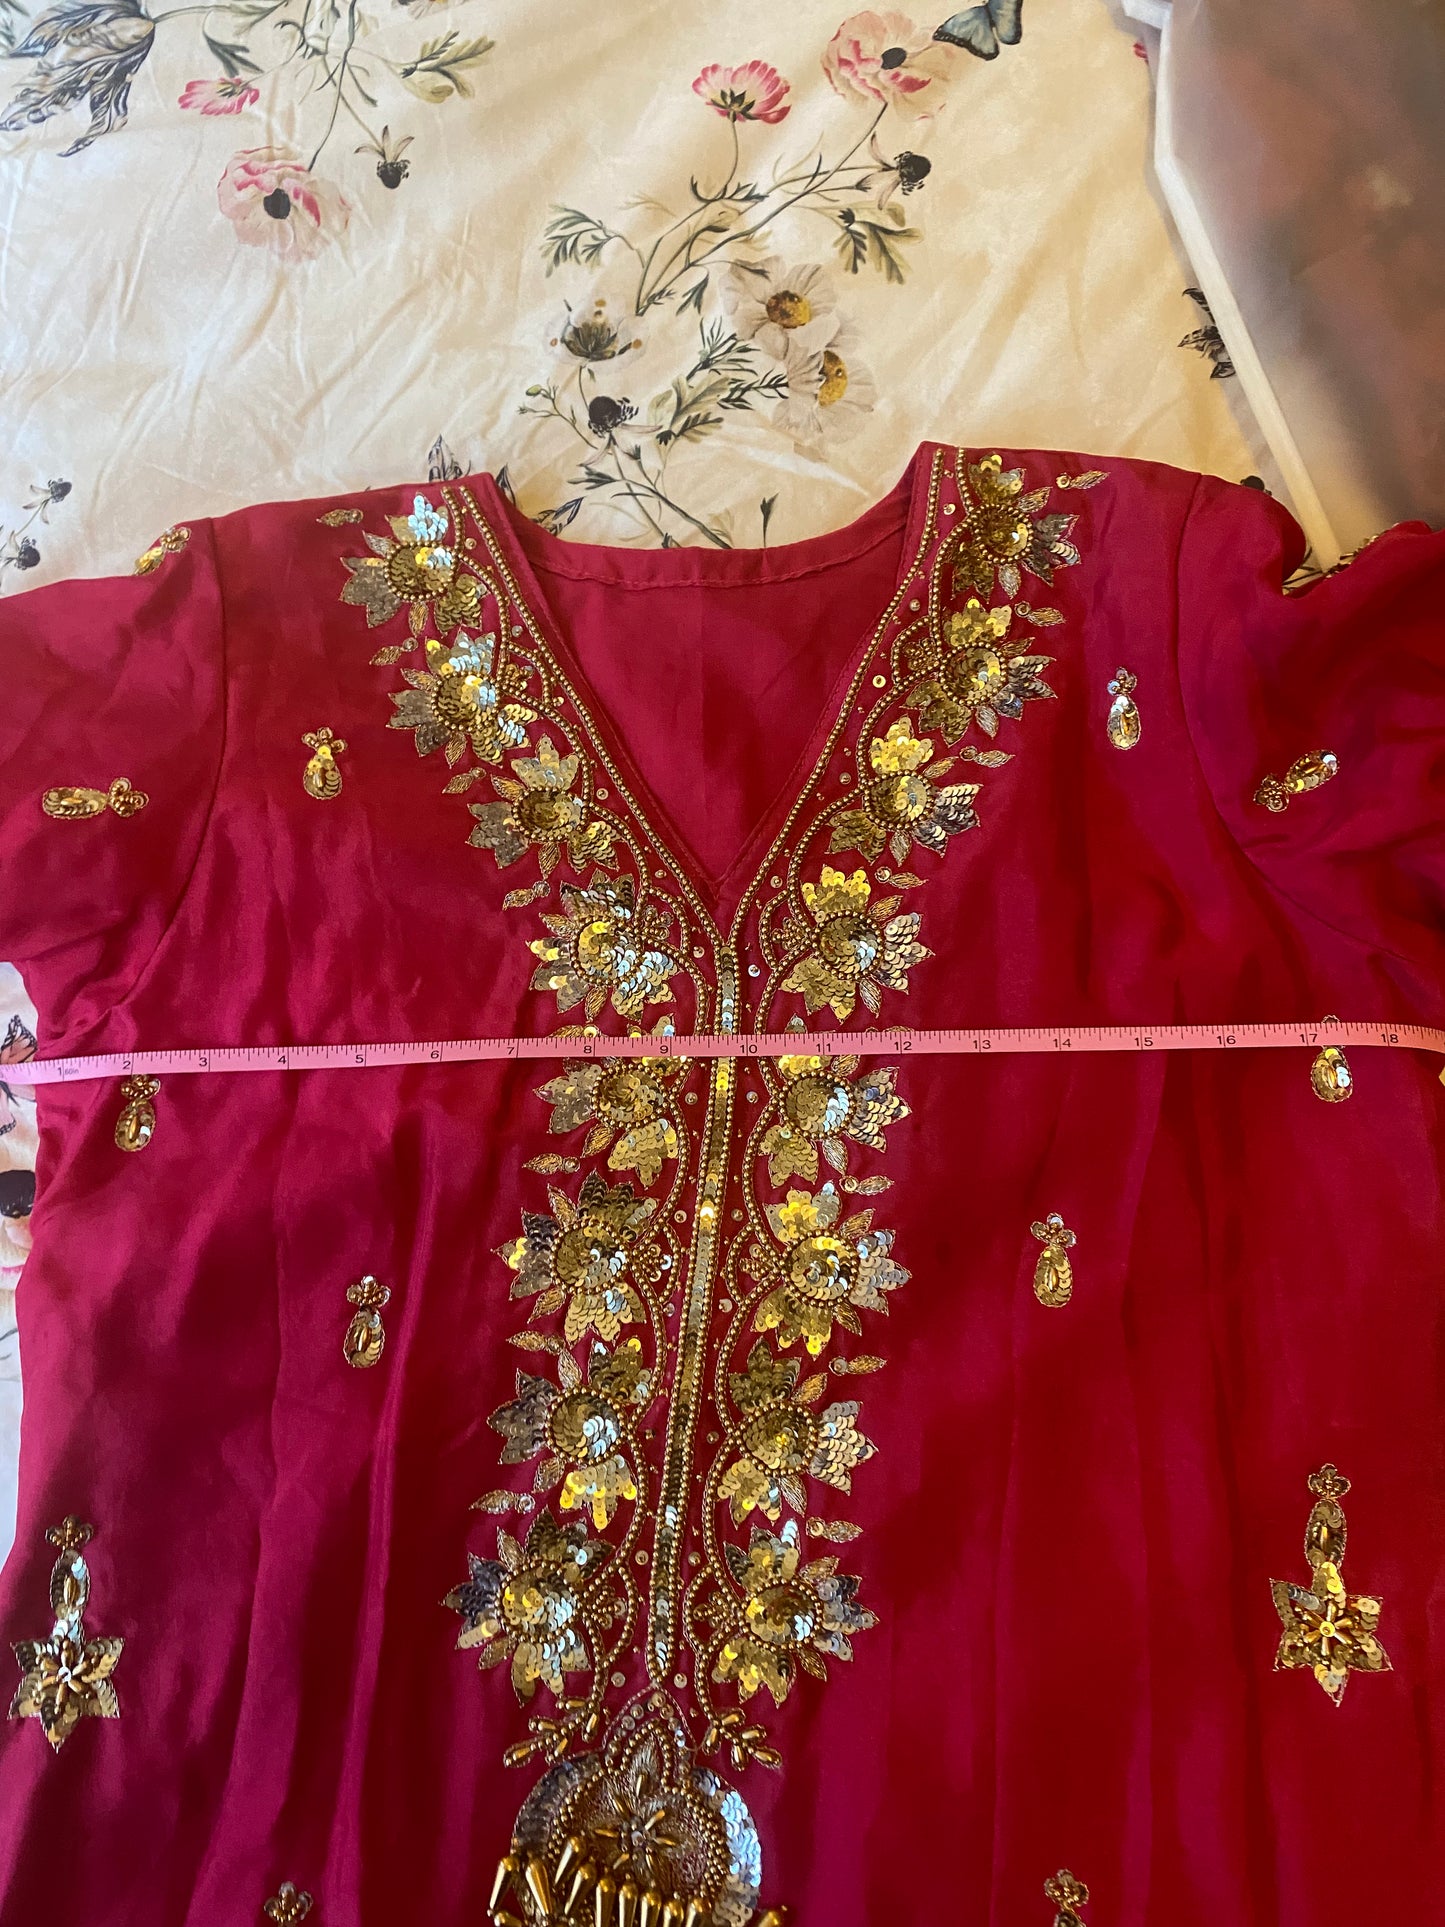 New Clothing: Pink Silk, 3 Piece Wedding Dress